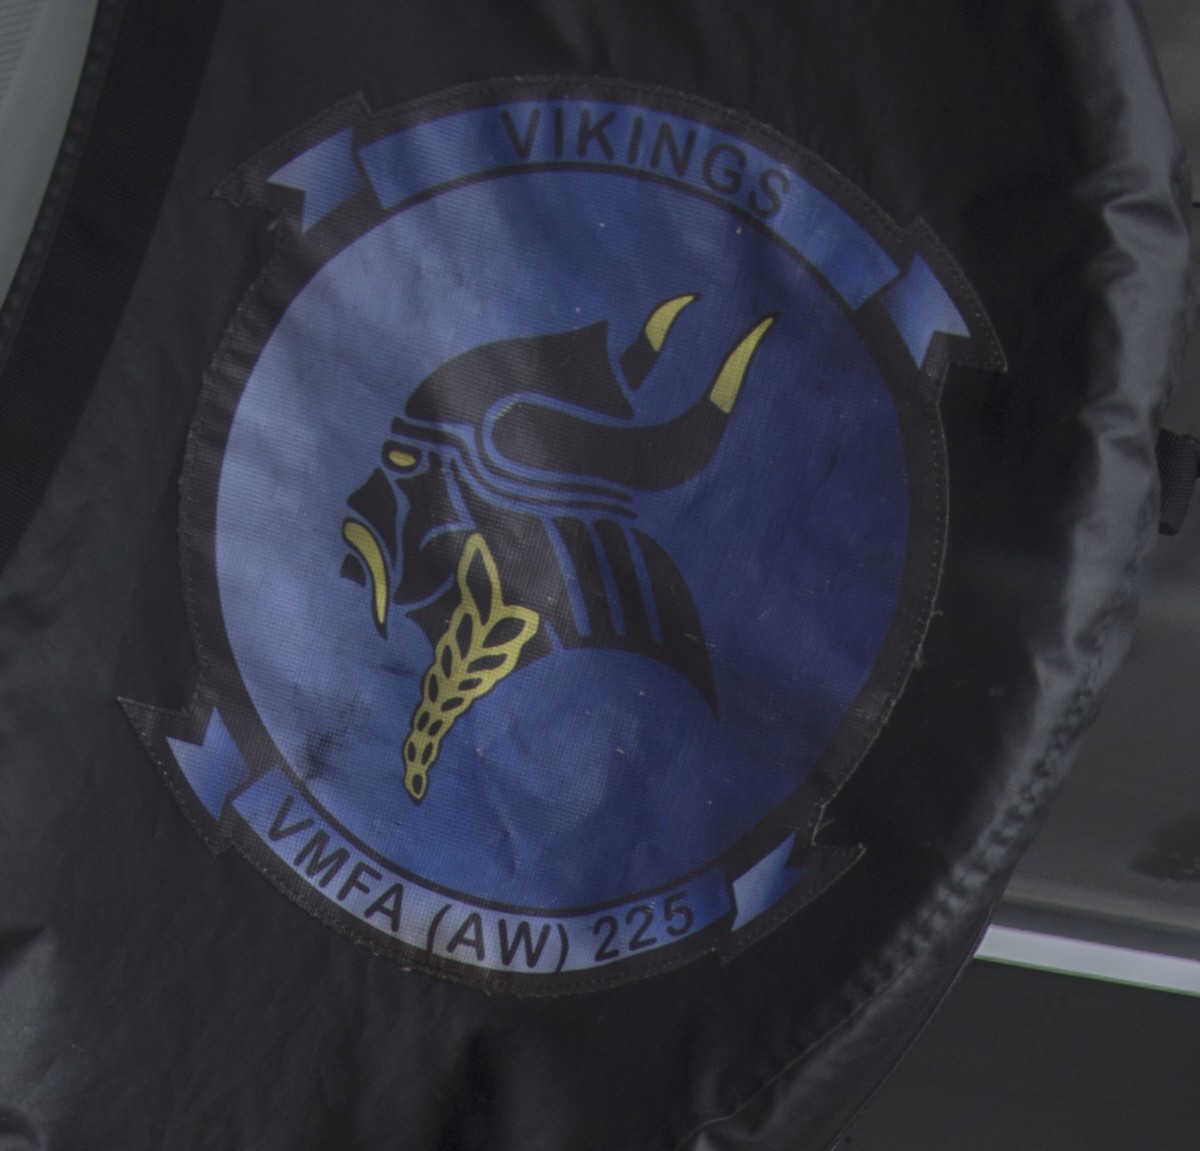 vmfa(aw)-225 vikings insignia crest patch badge marine fighter attack squadron usmc 03c